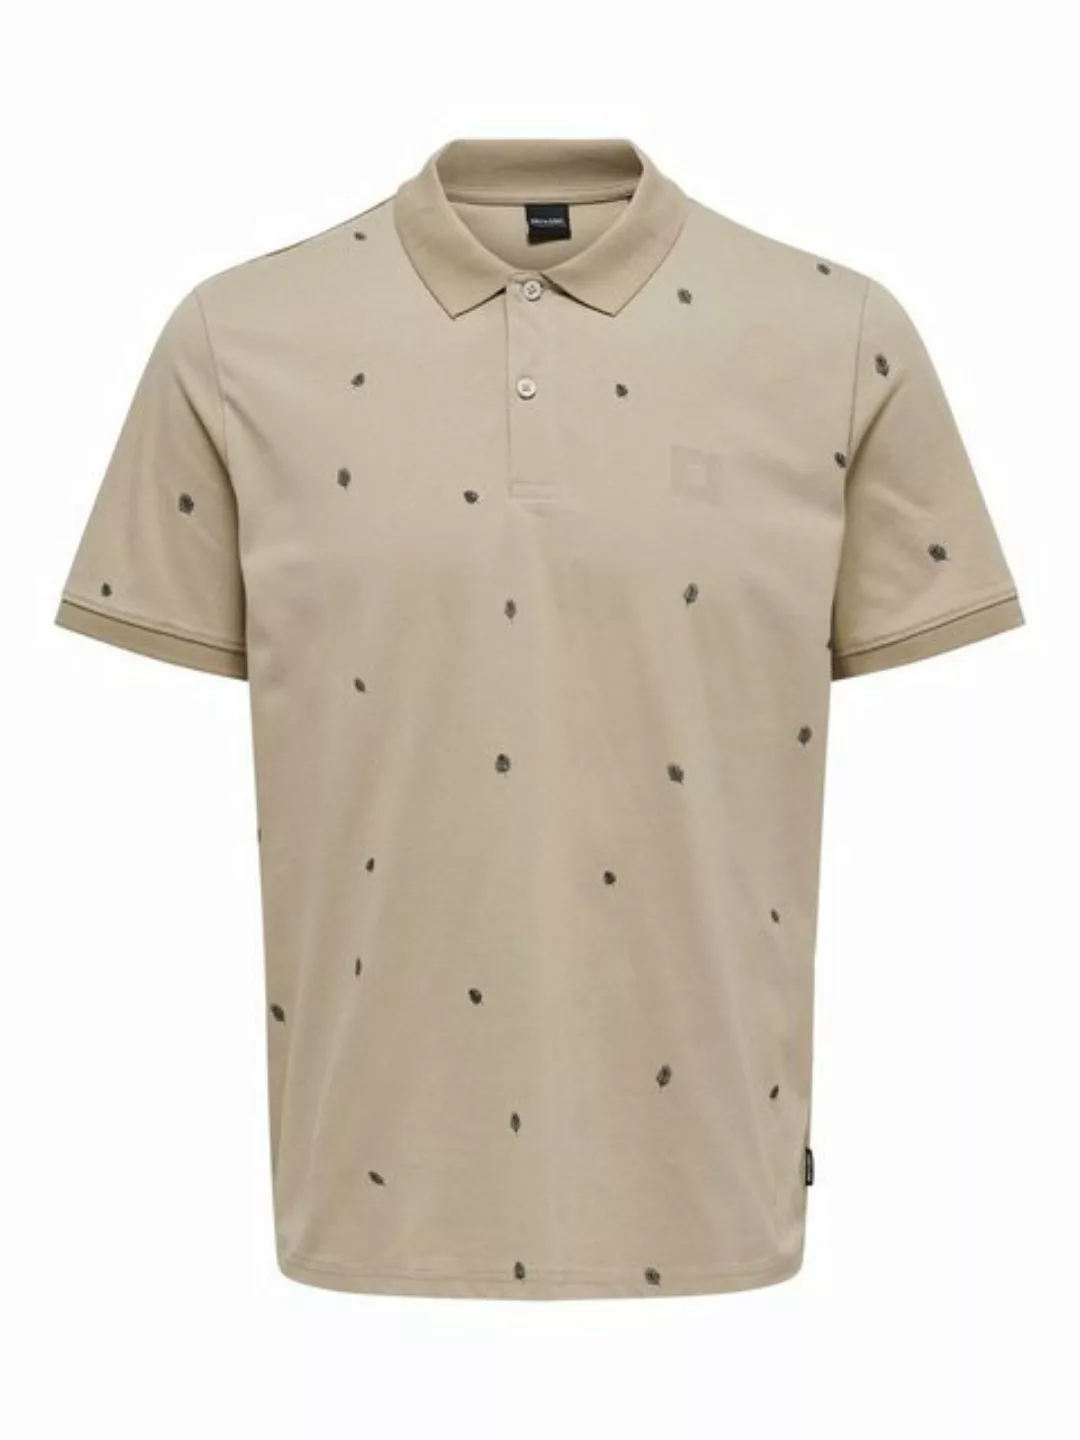 ONLY & SONS Poloshirt Poloshirt aus Baumwolle Klassisches Kurzarm Polohemd günstig online kaufen